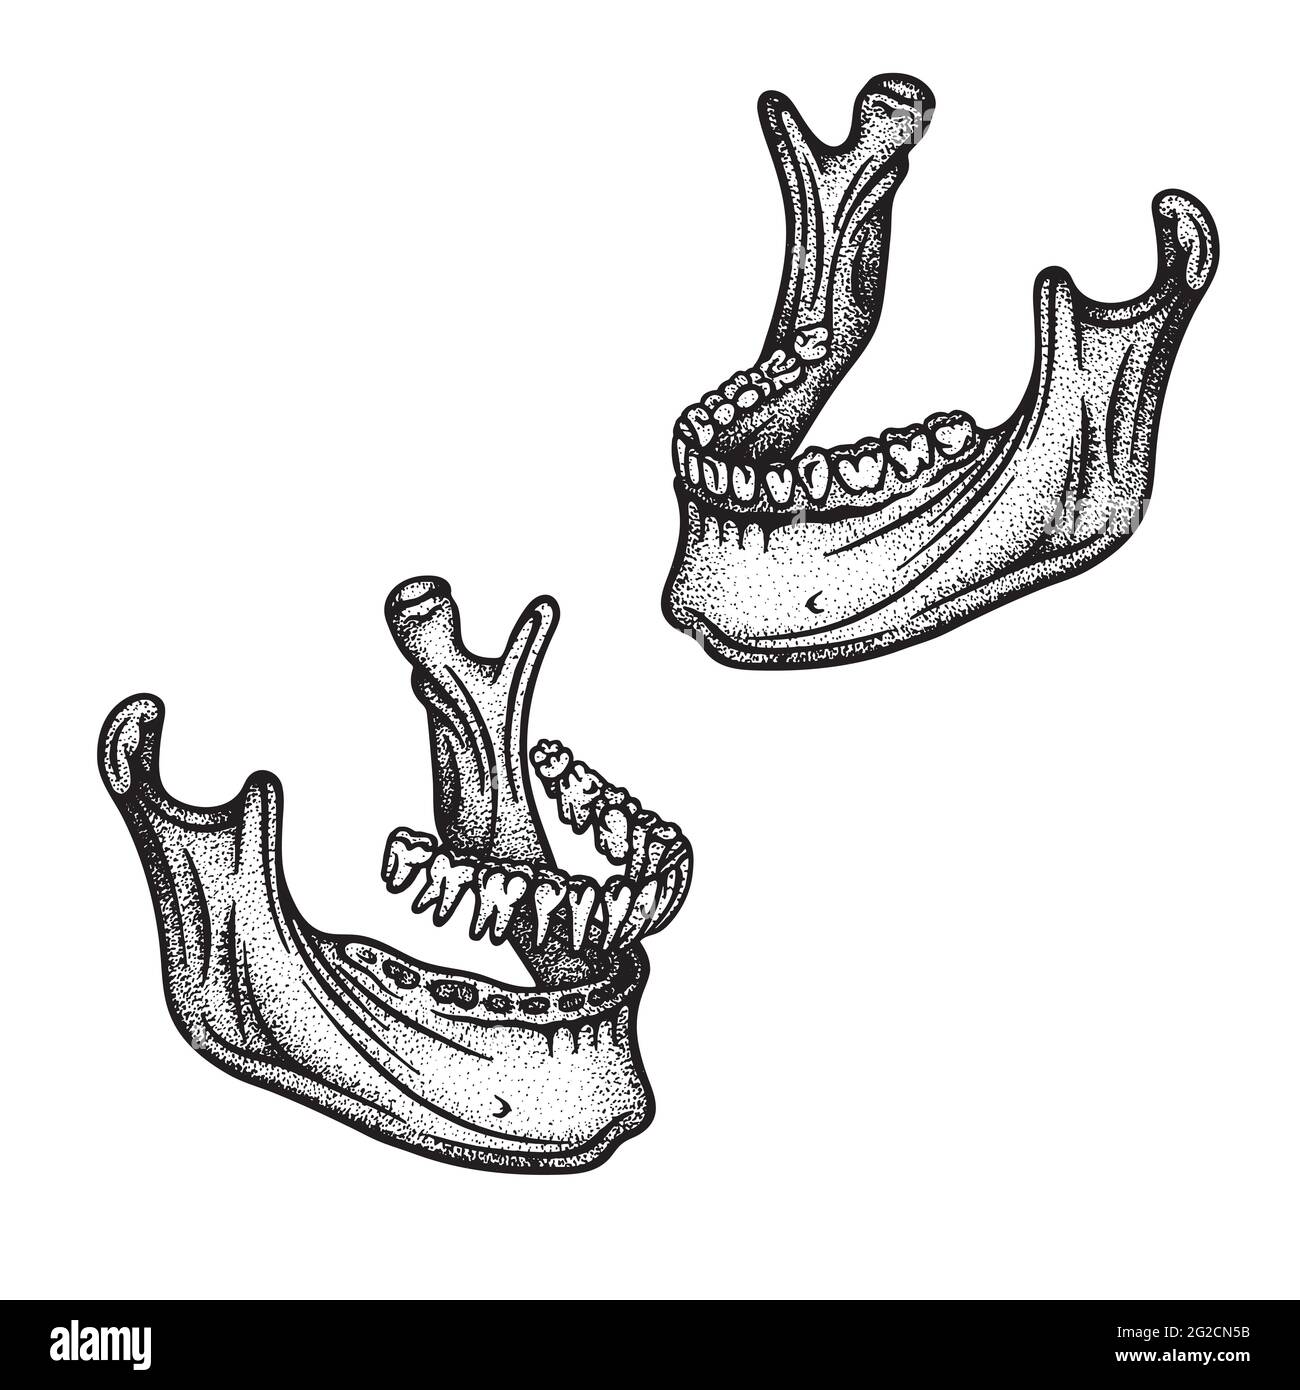 Human jaw bone with teeth. Mandible hand drawn vector illustrations set. Part of human skeleton graphic. Stock Vector